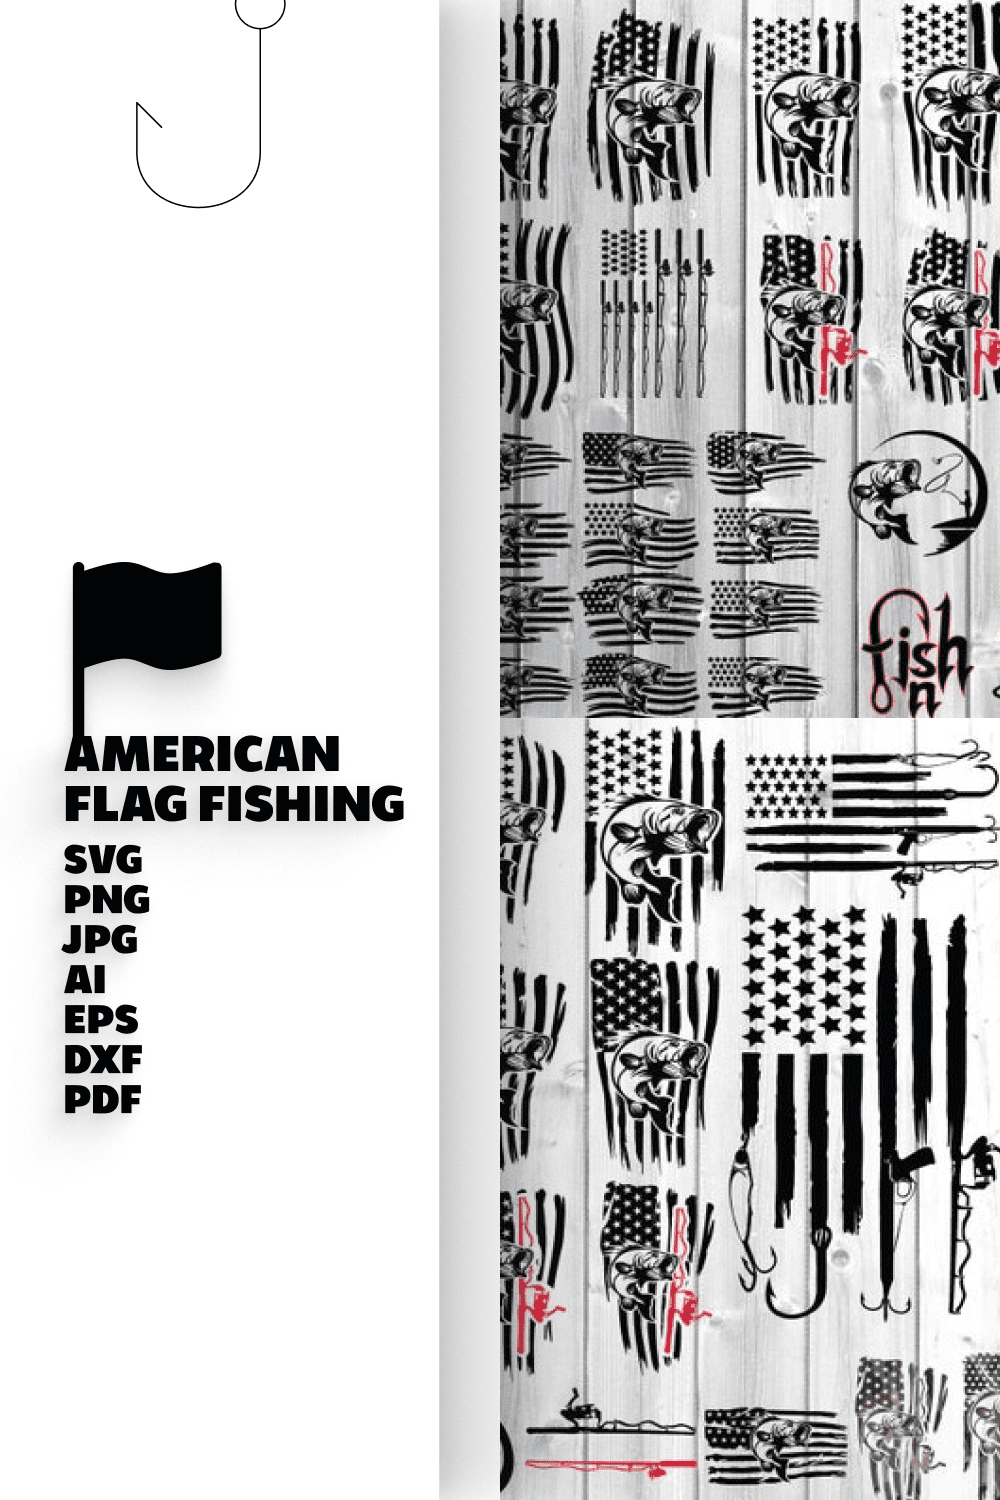 American Flag Fishing SVG.